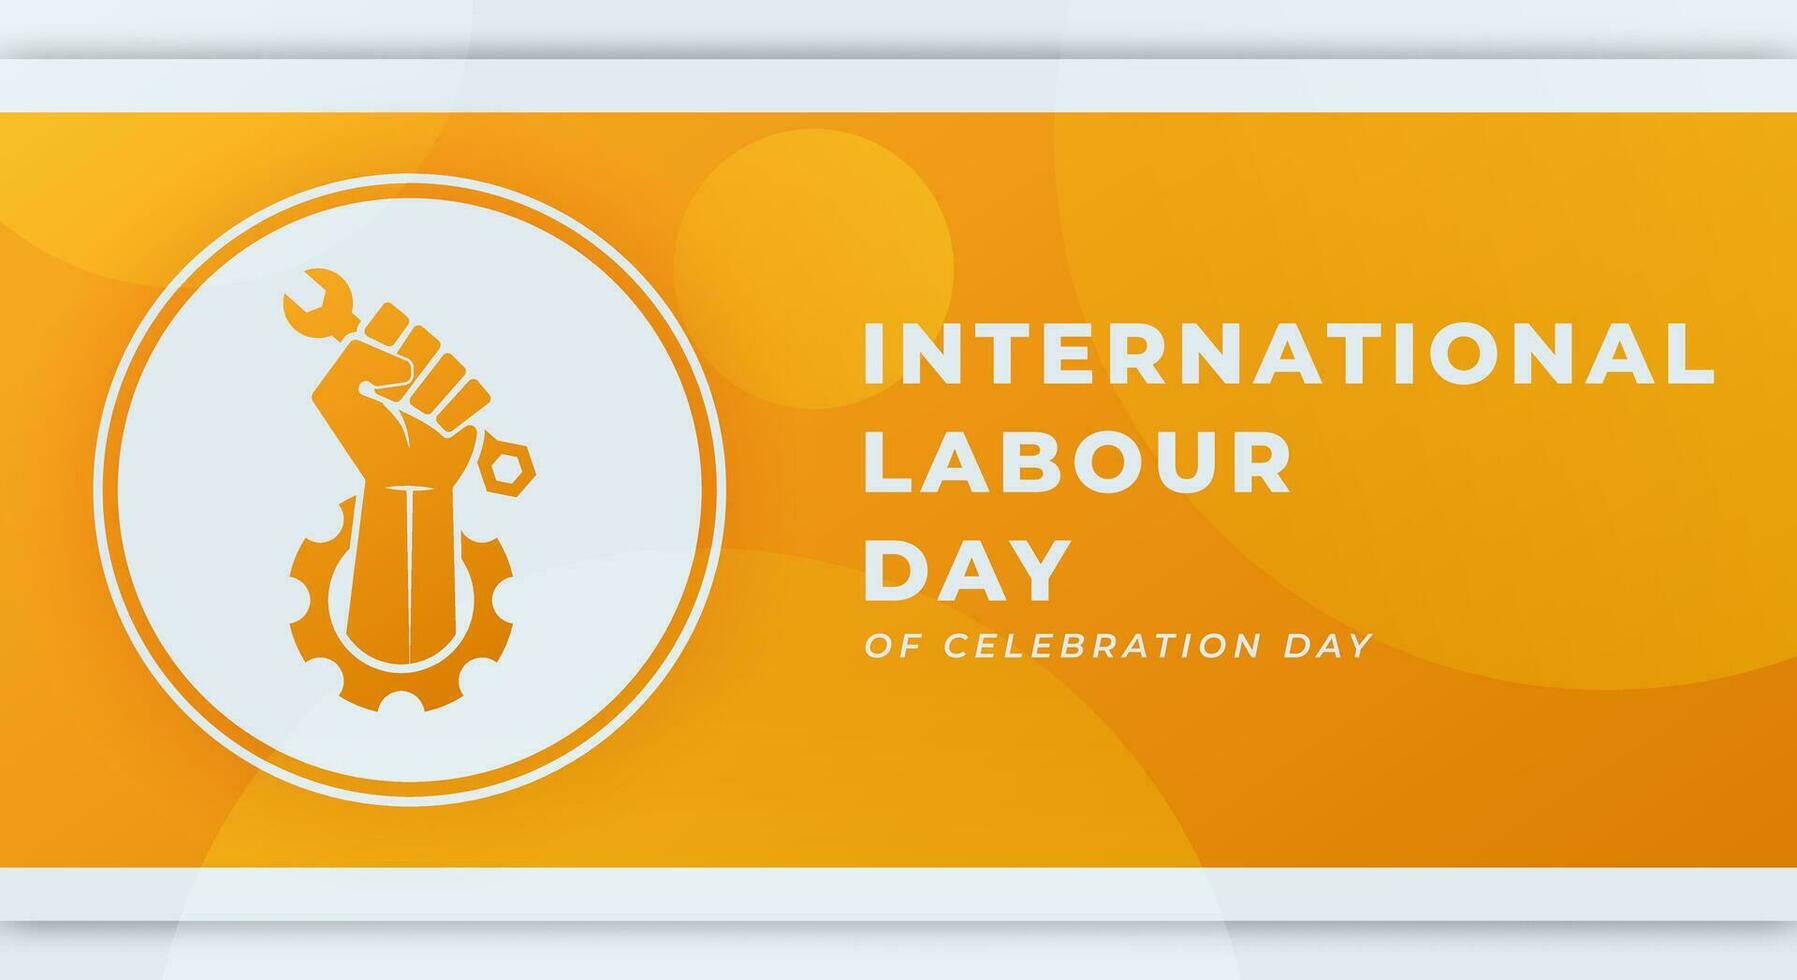 International Labor Day Celebration Vector Design Illustration for Background, Poster, Banner, Advertising, Greeting Card